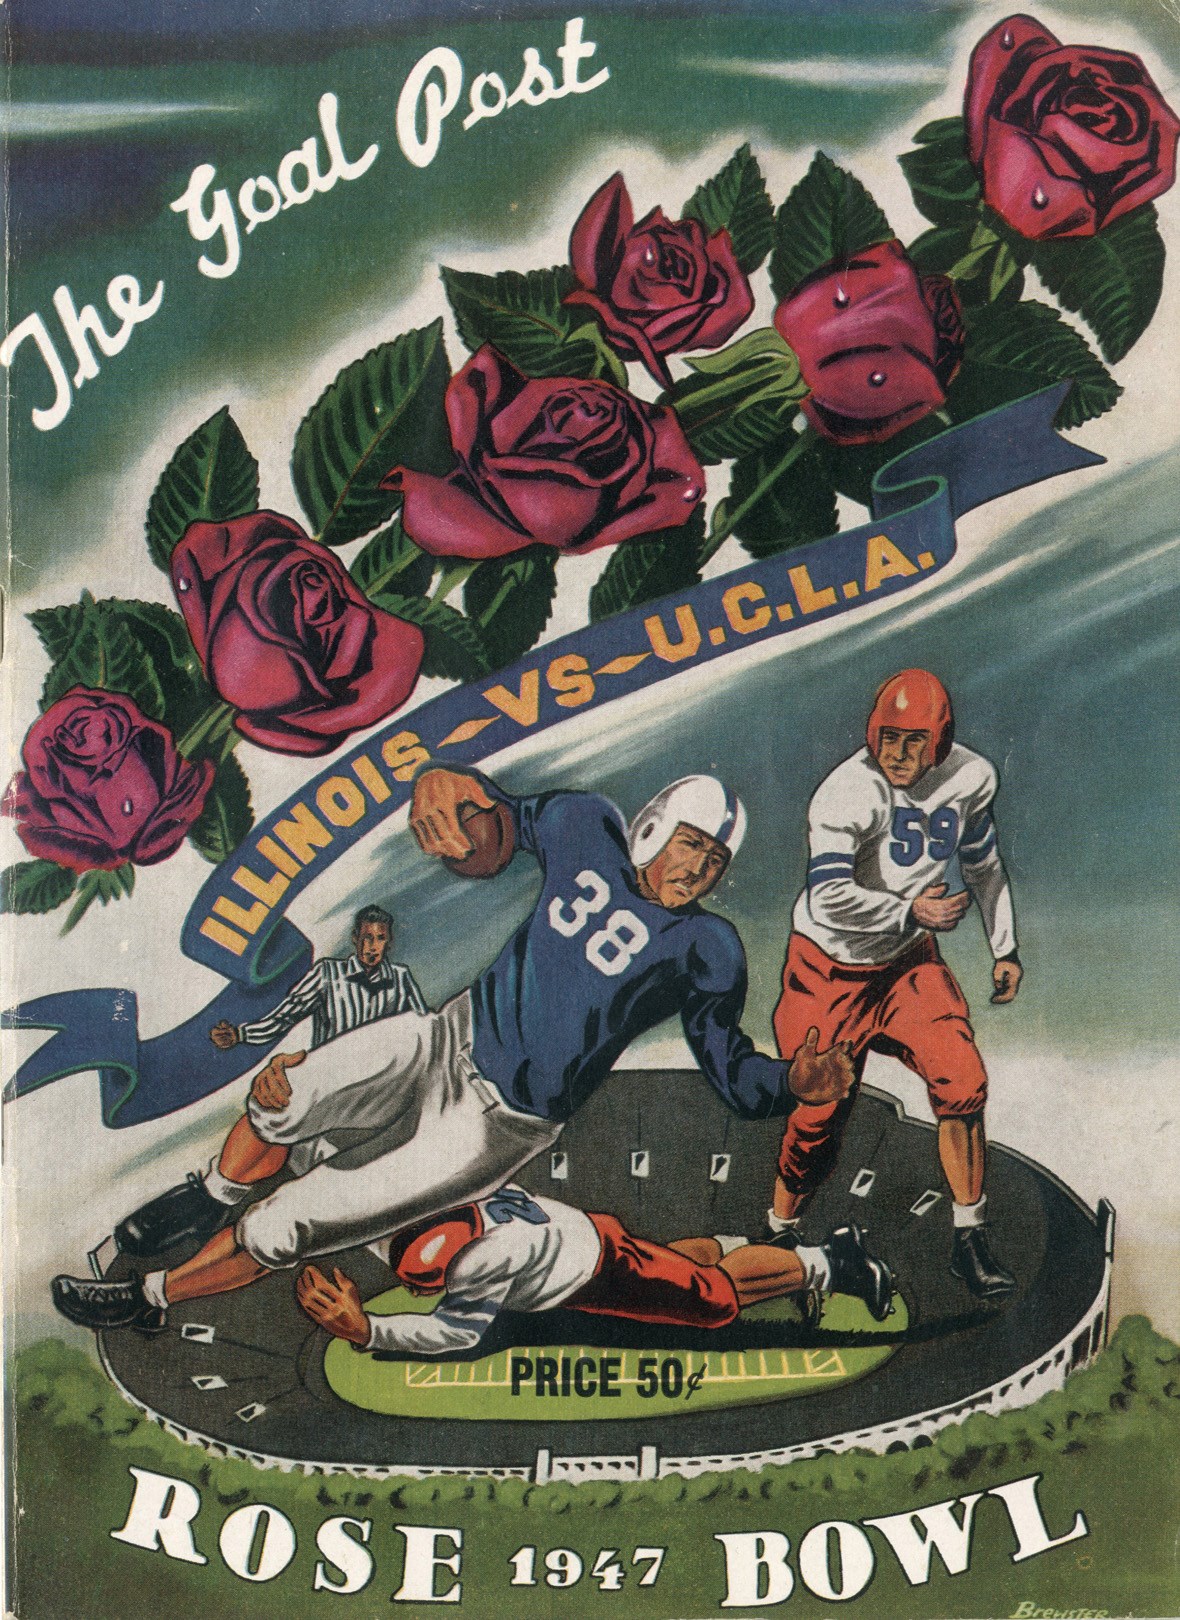 Internet Only - 1947 Rose Bowl Program